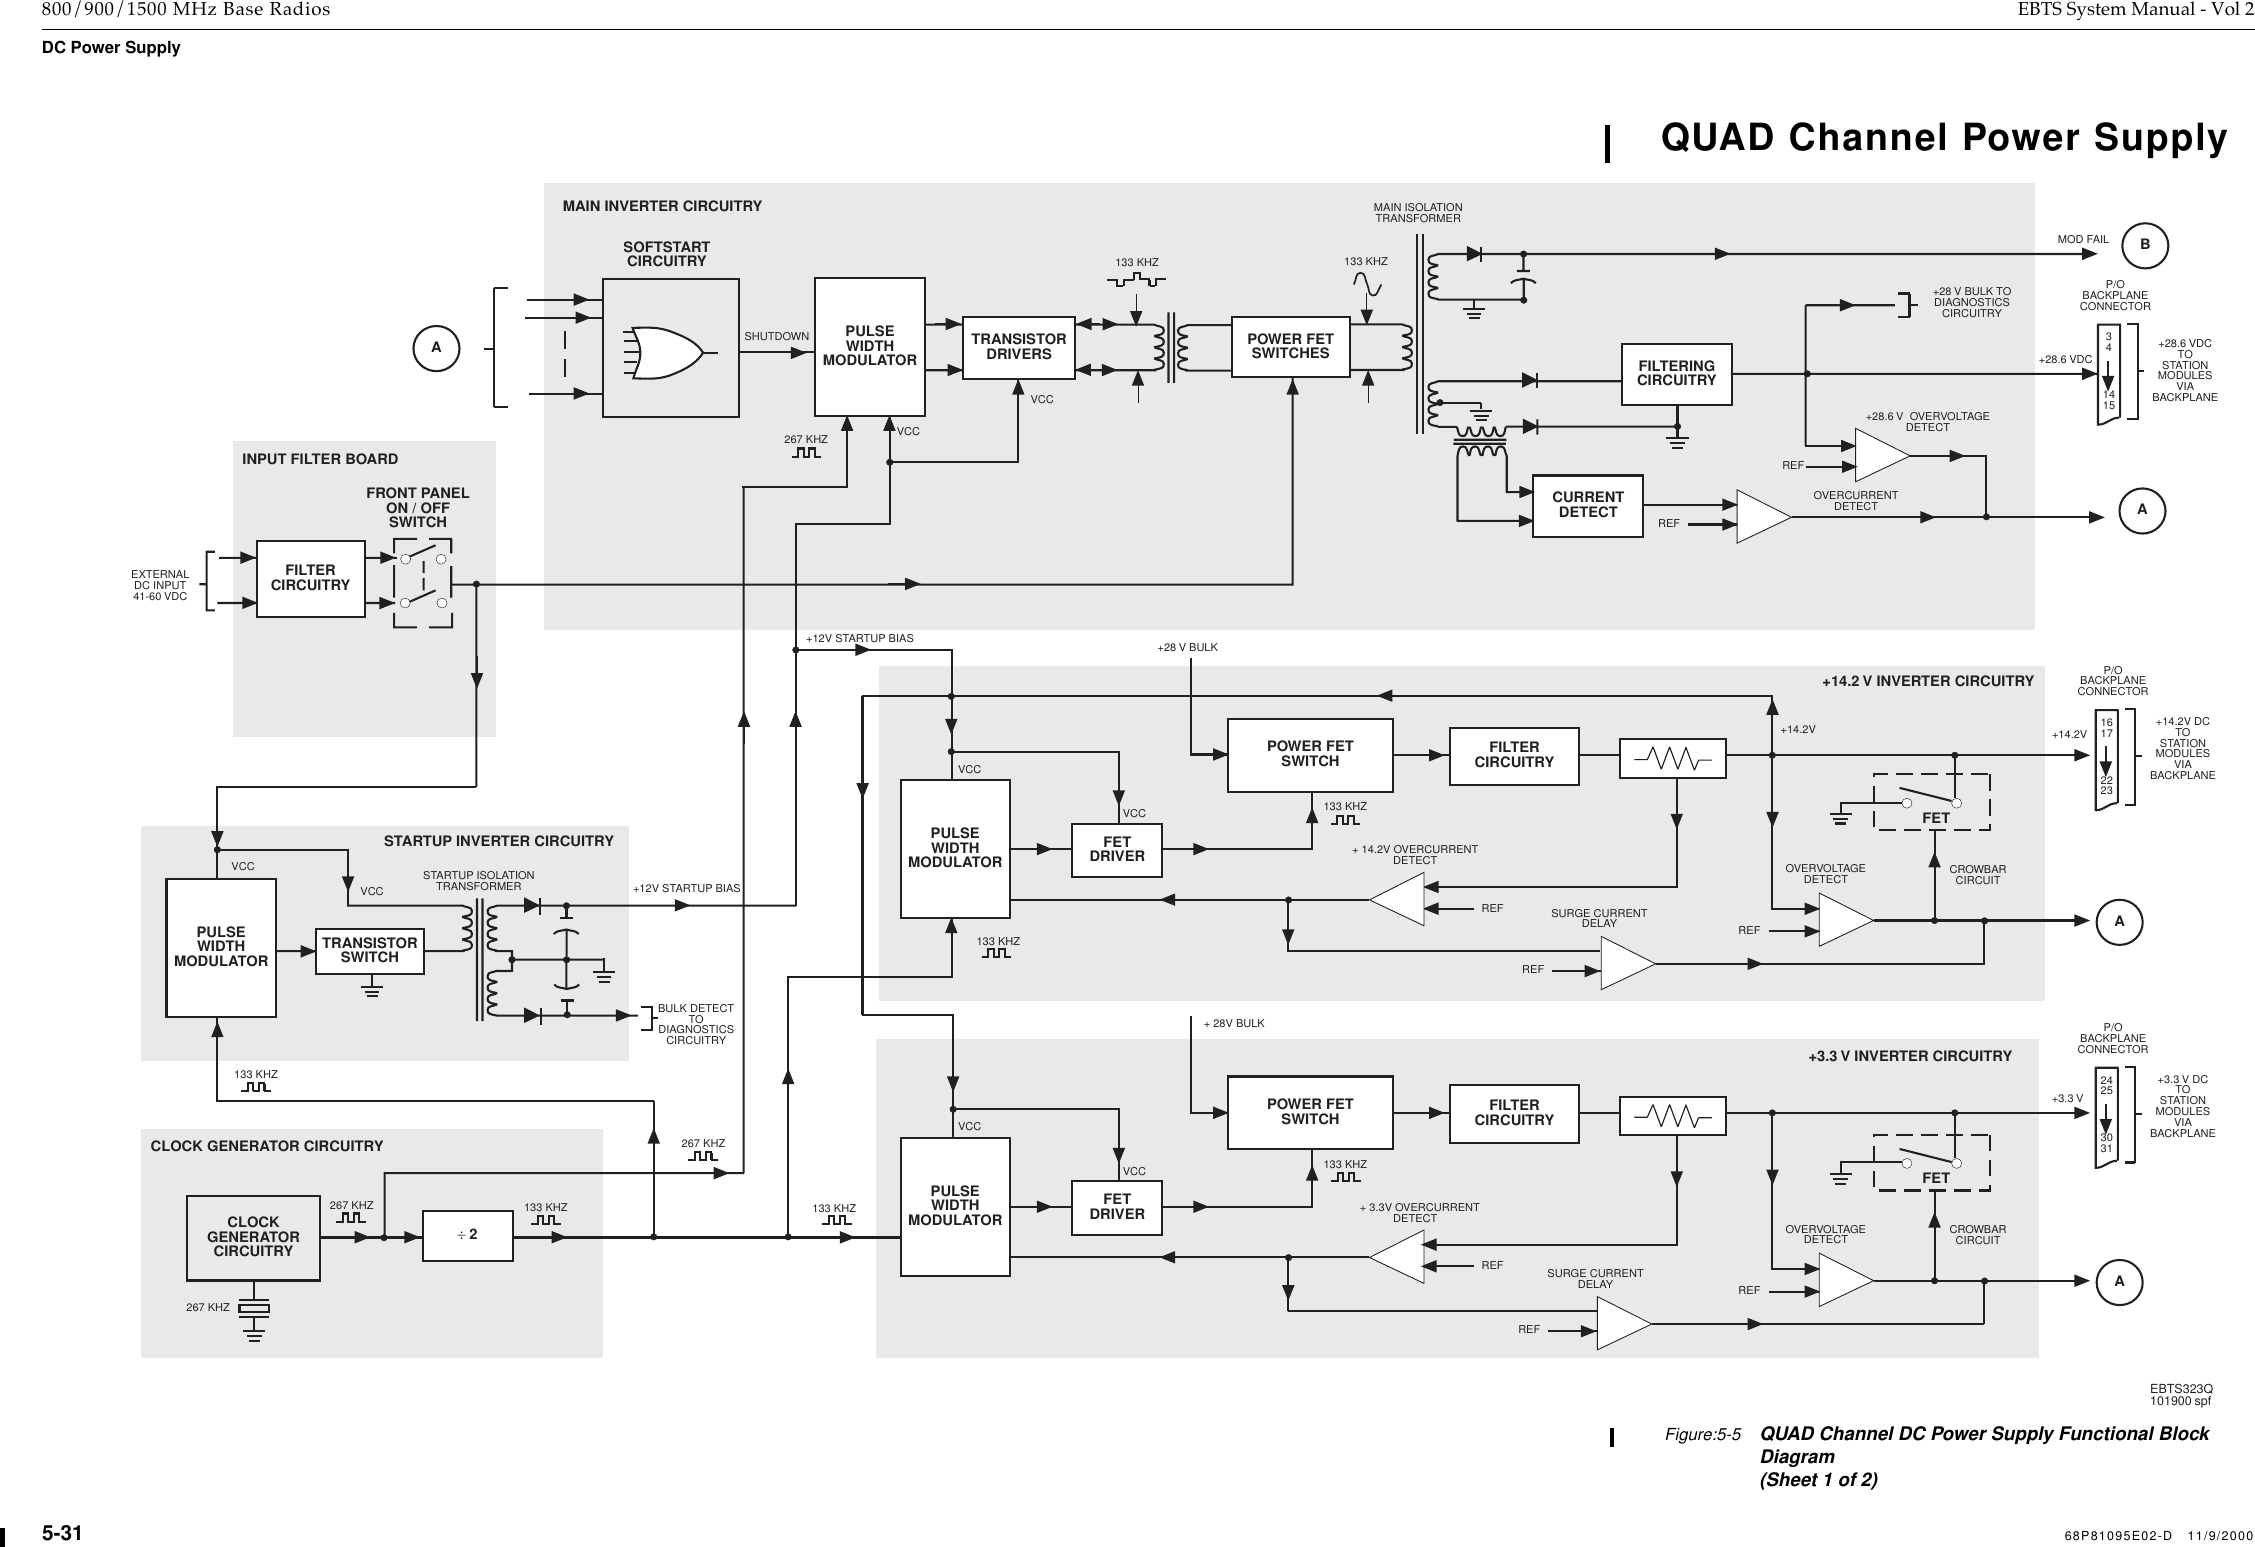  5-31 68P81095E02-D   11/9/2000 800/900/1500 MHz Base Radios EBTS System Manual - Vol 2 DC Power Supply  Figure:5-5QUAD Channel DC Power Supply Functional Block Diagram(Sheet 1 of 2)QUAD Channel Power Supply+3.3 V INVERTER CIRCUITRYFETDRIVERPOWER FETSWITCH FILTERCIRCUITRYVCCVCC+ 3.3V OVERCURRENTDETECTREFREFSURGE CURRENTDELAY REFOVERVOLTAGEDETECTFETCROWBARCIRCUIT+ 28V BULKPULSEWIDTHMODULATORA24253031+3.3 V DCTOSTATIONMODULESVIABACKPLANEP/OBACKPLANECONNECTOR+3.3 V÷ 2CLOCK GENERATOR CIRCUITRYSTARTUP INVERTER CIRCUITRYBULK DETECTTODIAGNOSTICSCIRCUITRYPULSEWIDTHMODULATORVCCVCC STARTUP ISOLATIONTRANSFORMER+14.2 V INVERTER CIRCUITRYFETDRIVERPOWER FETSWITCH FILTERCIRCUITRYVCCVCC+ 14.2V OVERCURRENTDETECTREFREFSURGE CURRENTDELAY REFOVERVOLTAGEDETECTFETCROWBARCIRCUITA16172223+14.2V DCTOSTATIONMODULESVIABACKPLANEP/OBACKPLANECONNECTOR+14.2V+14.2VPULSEWIDTHMODULATORPULSEWIDTHMODULATORFRONT PANELON / OFFSWITCHEXTERNALDC INPUT41-60 VDCFILTERCIRCUITRYINPUT FILTER BOARD341415+28.6 VDCTOSTATIONMODULESVIABACKPLANEP/OBACKPLANECONNECTORMAIN INVERTER CIRCUITRYREFREFCURRENTDETECT A+28.6 V  OVERVOLTAGEDETECT+28 V BULK TODIAGNOSTICSCIRCUITRYOVERCURRENTDETECT+28.6 VDCCLOCKGENERATORCIRCUITRY267 KHZTRANSISTORSWITCHBMAIN ISOLATIONTRANSFORMERTRANSISTORDRIVERSSOFTSTARTCIRCUITRYSHUTDOWNA+12V STARTUP BIAS+12V STARTUP BIASVCCVCCMOD FAIL133 KHZ267 KHZ133 KHZ133 KHZ133 KHZ133 KHZ133 KHZ267 KHZ133 KHZ267 KHZ133 KHZPOWER FETSWITCHES FILTERINGCIRCUITRY+28 V BULKEBTS323Q101900 spf